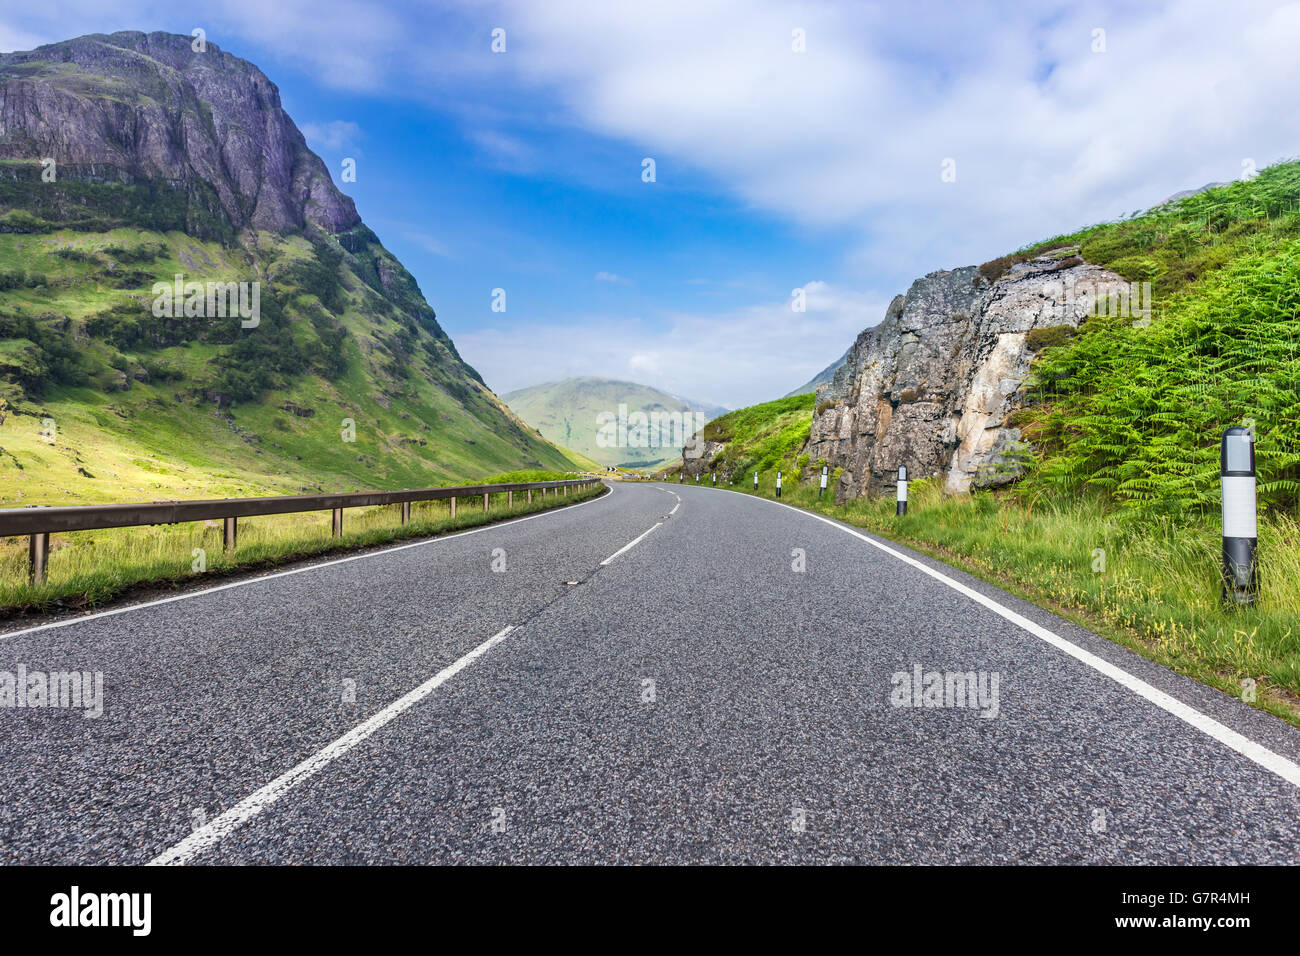 Empty Asphalt Road A82 across Scottish Highlands Stock Photo